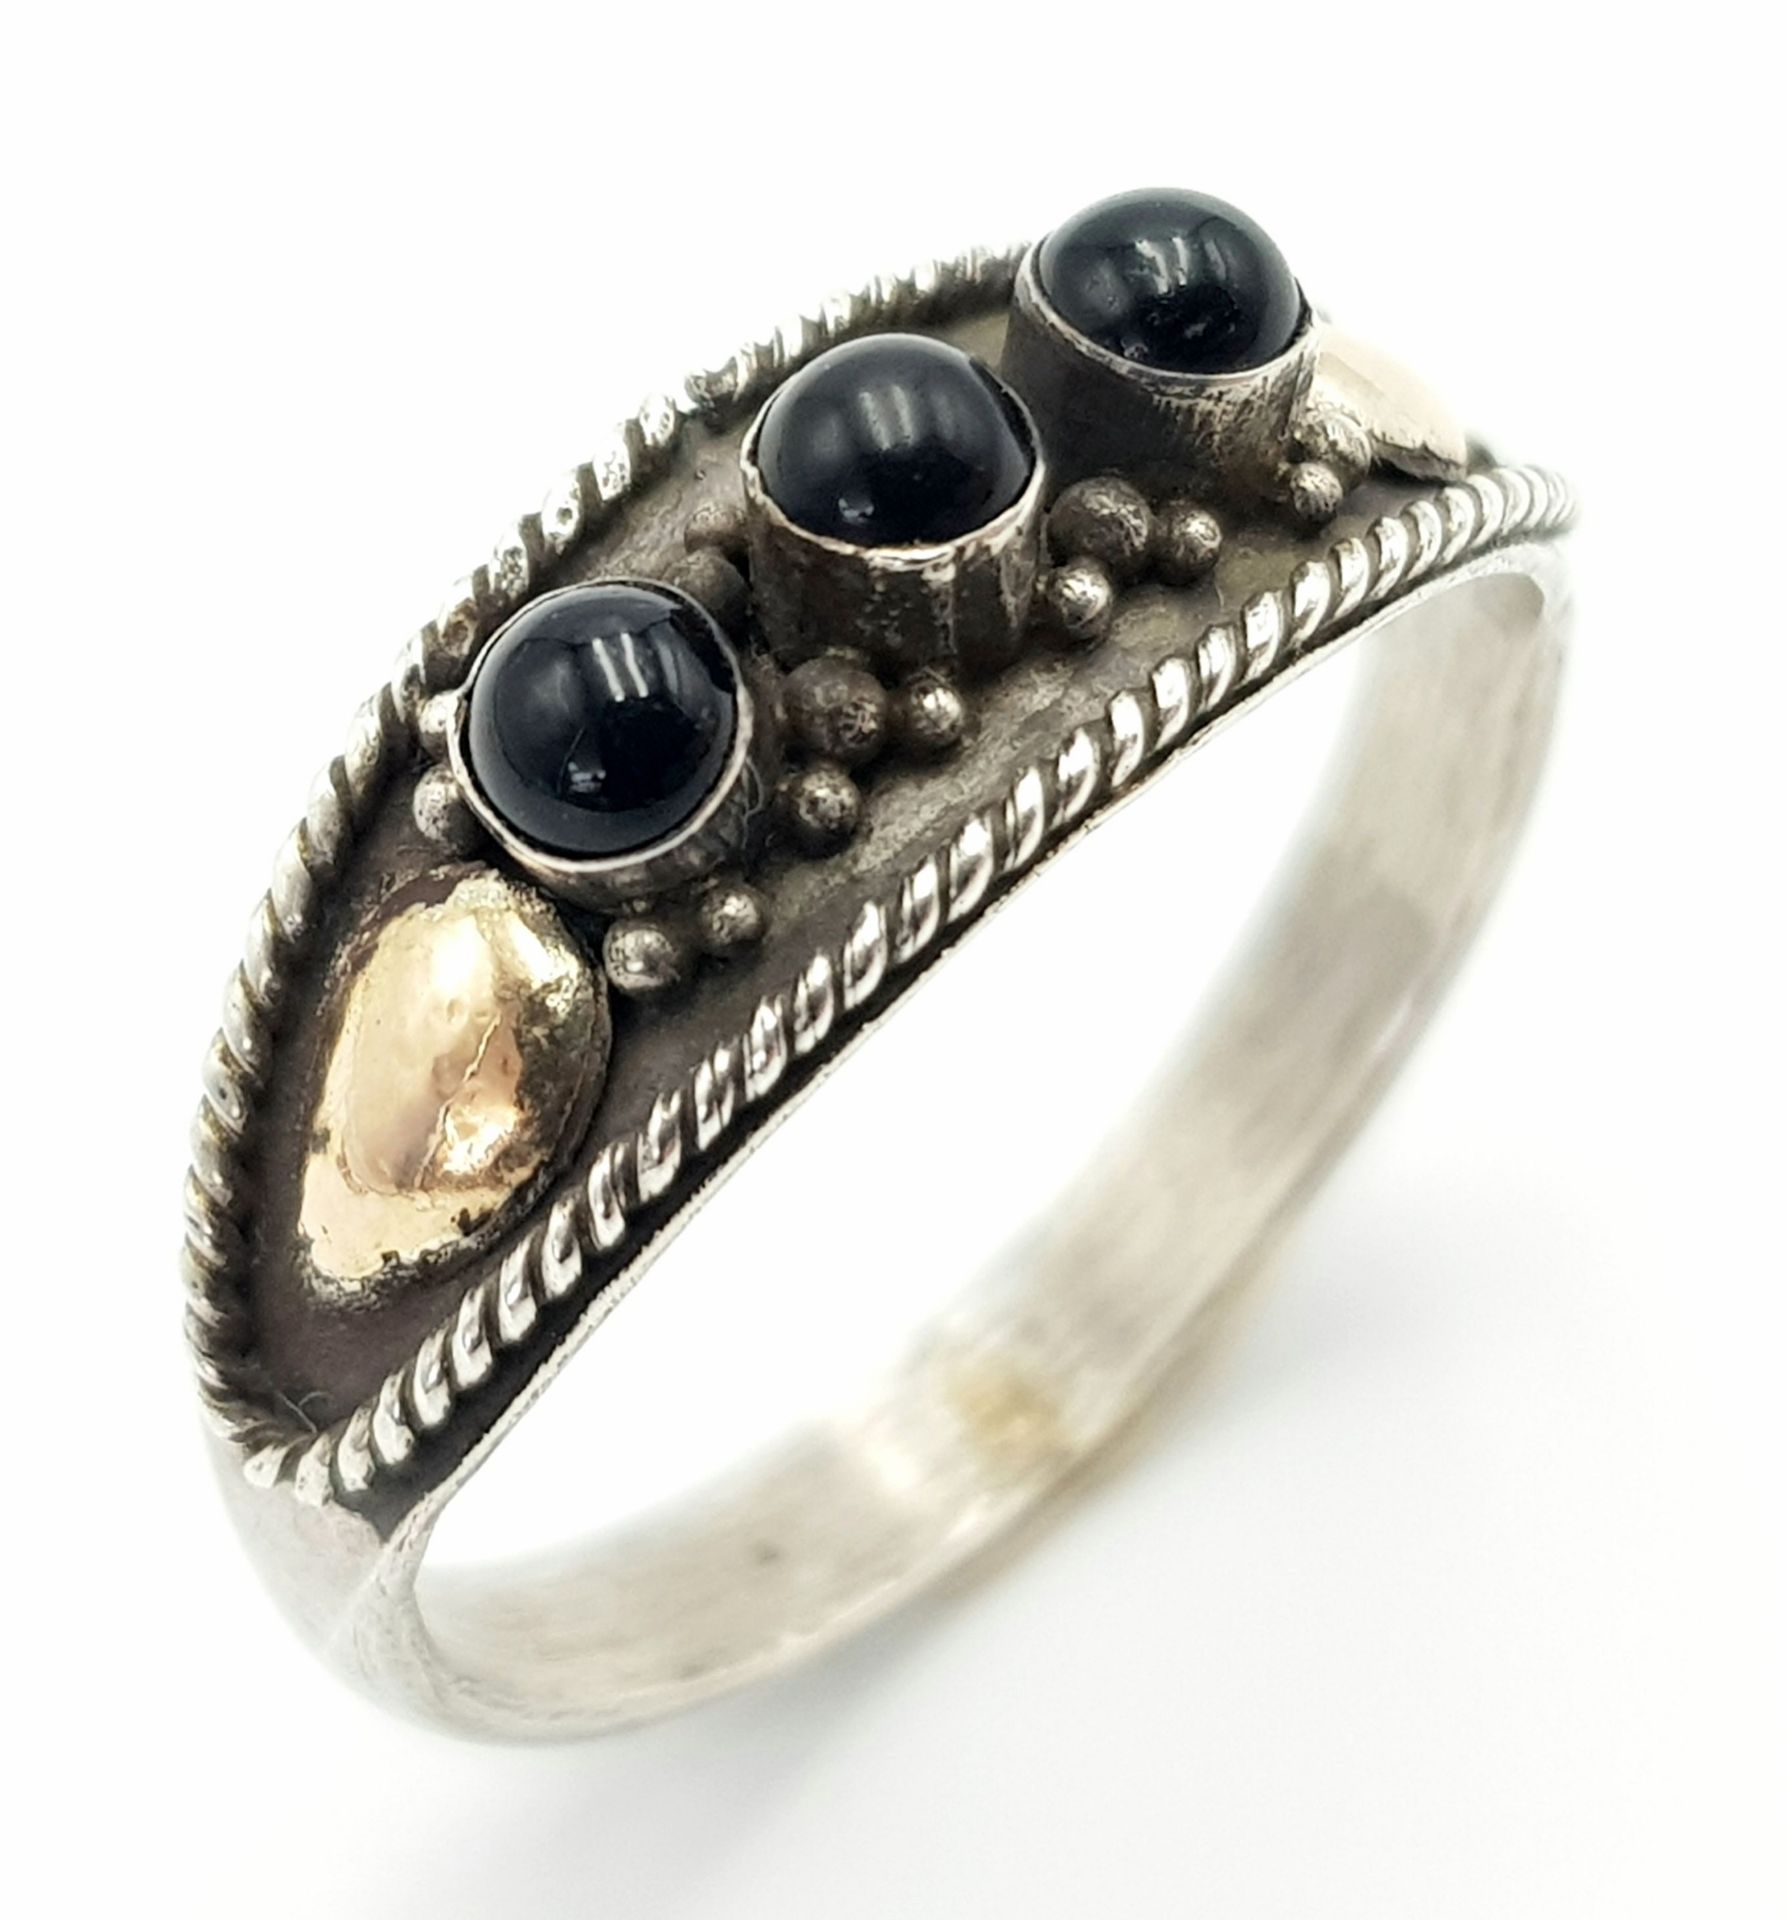 A Vintage or Older, Gold on Sterling Silver, Black Onyx Cabachon Set Ring. Size O. Measures 7mm Wide